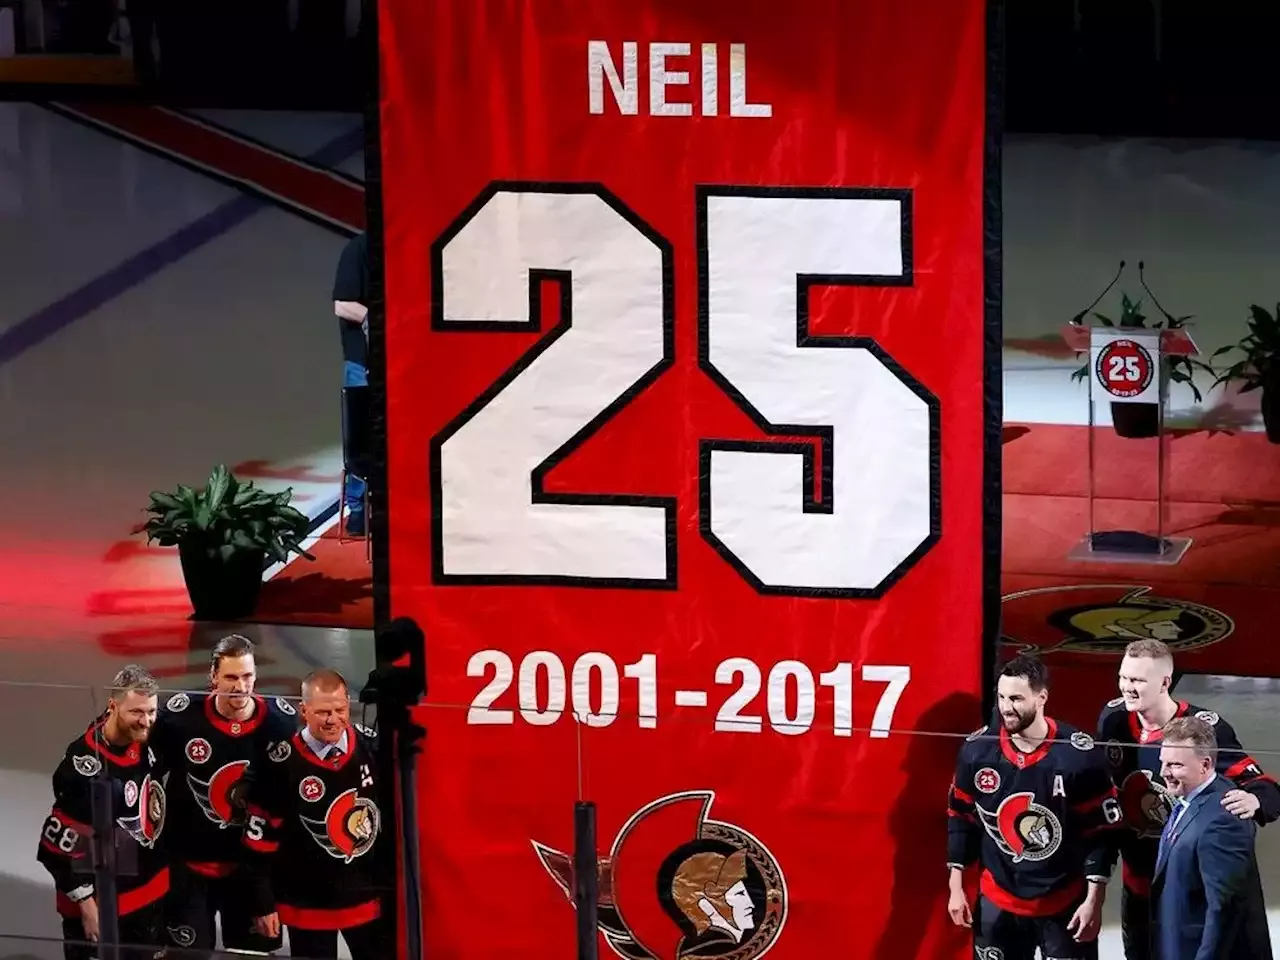 GARRIOCH: Chris Neil's No. 25 jersey will be retired by the Ottawa Senators  in February